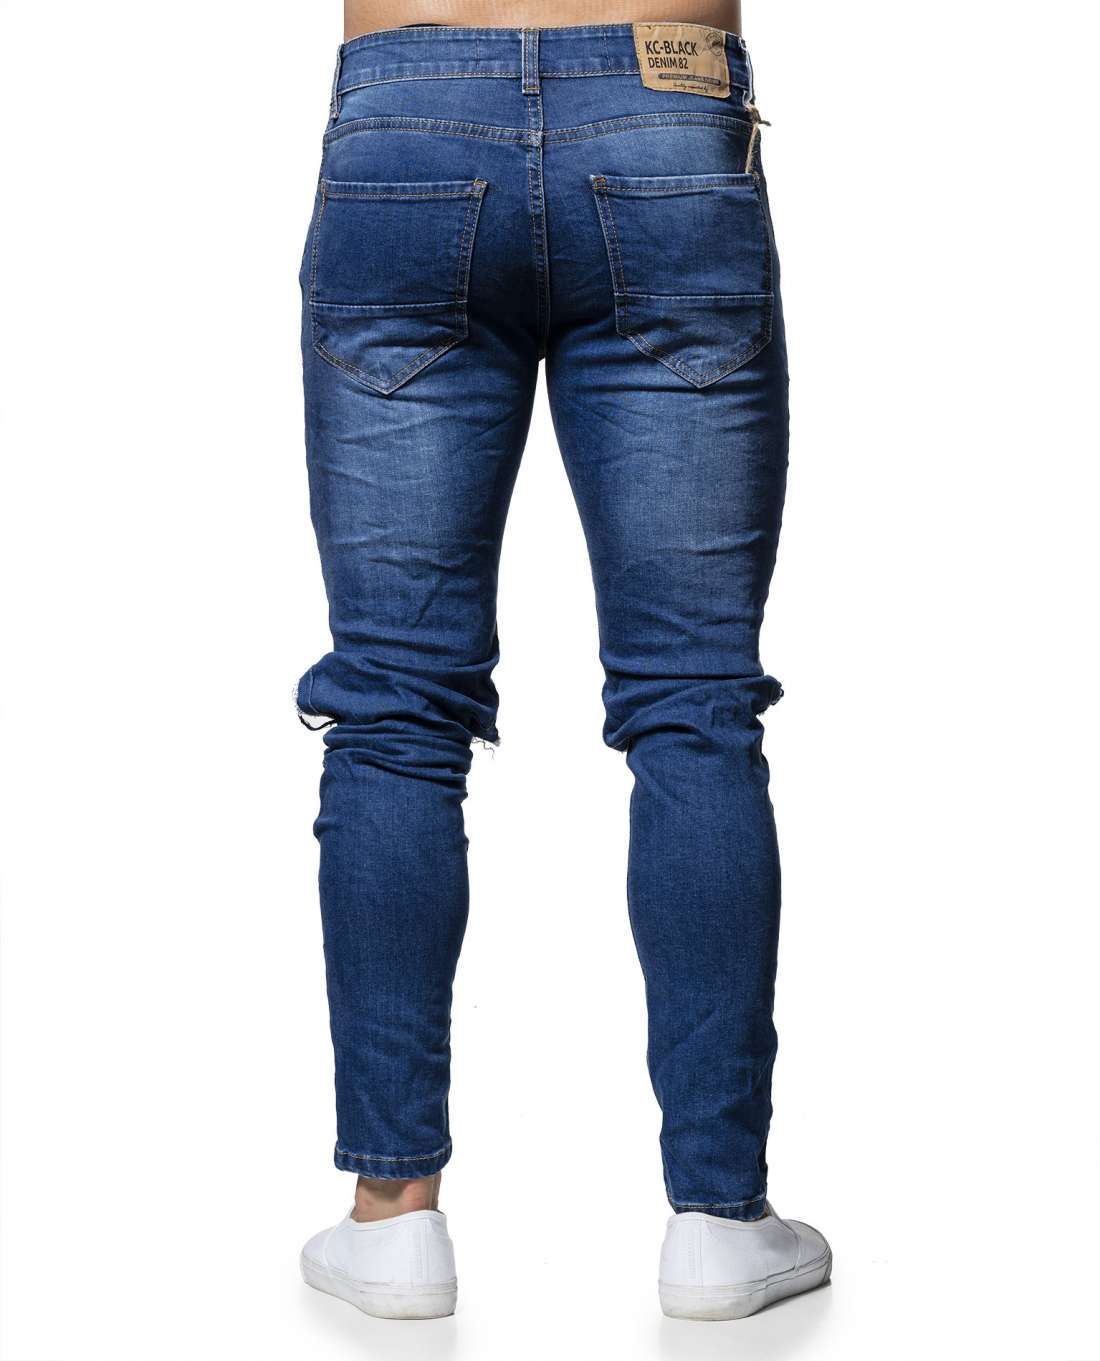 Knee Hole Jeans Blue L32 Jerone